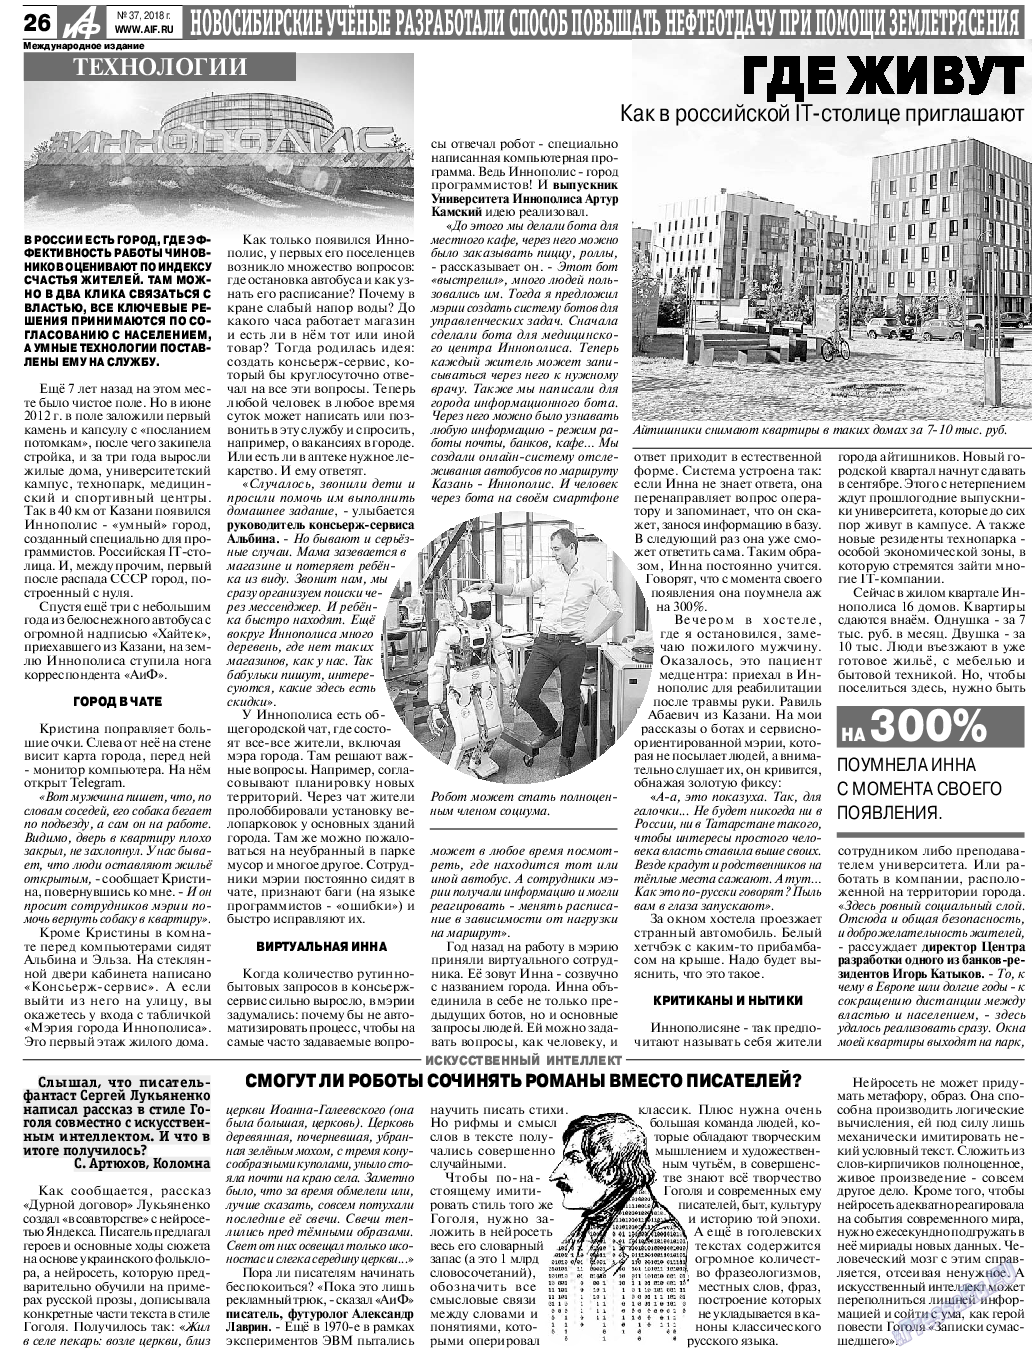 Аргументы и факты Европа, газета. 2018 №37 стр.26